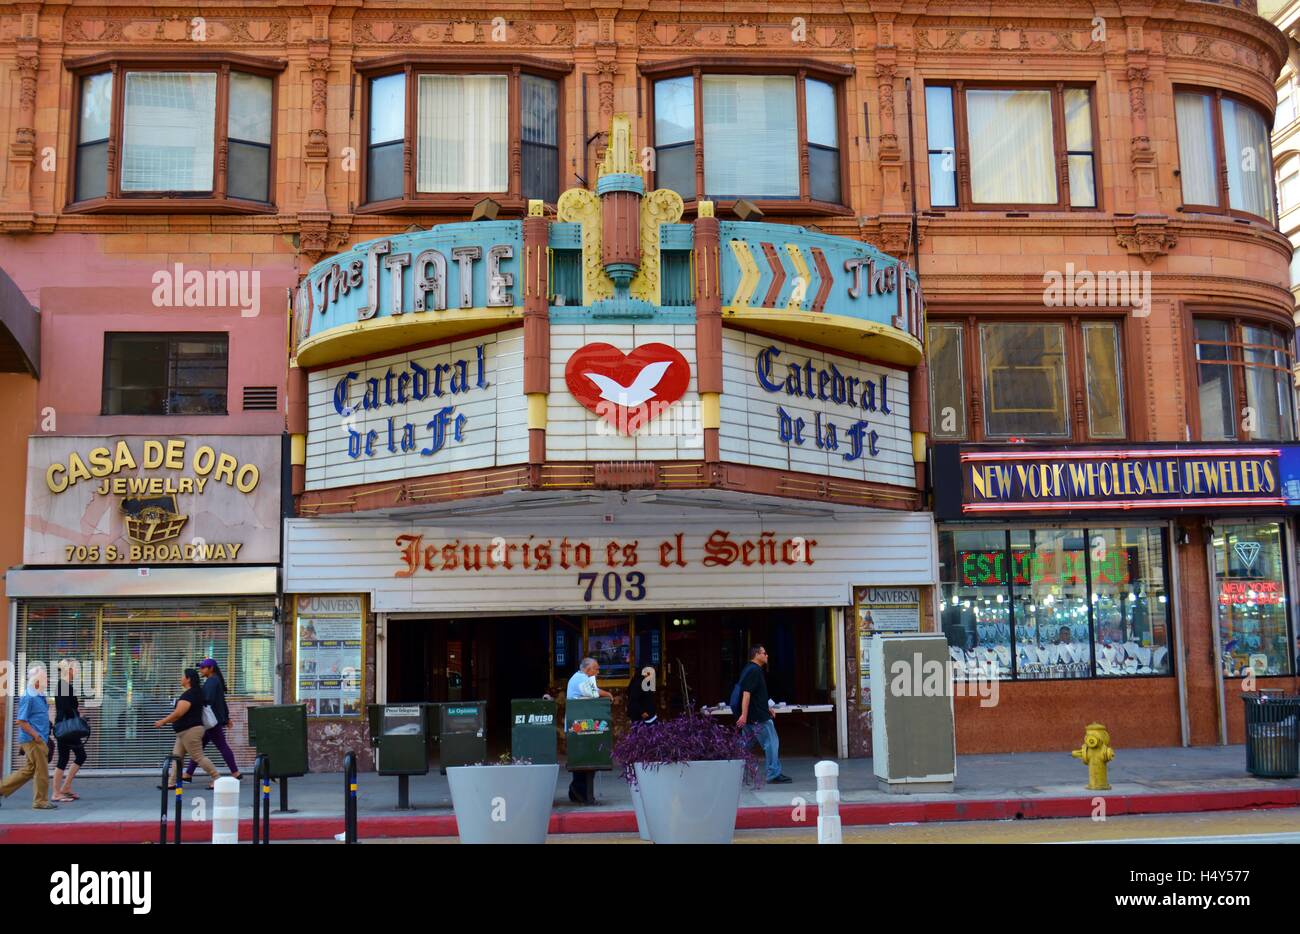 Staatstheater, Kino, Film, Spielhaus, Auditorium am Broadway in Downtown Los Angeles, Kalifornien, USA Stockfoto